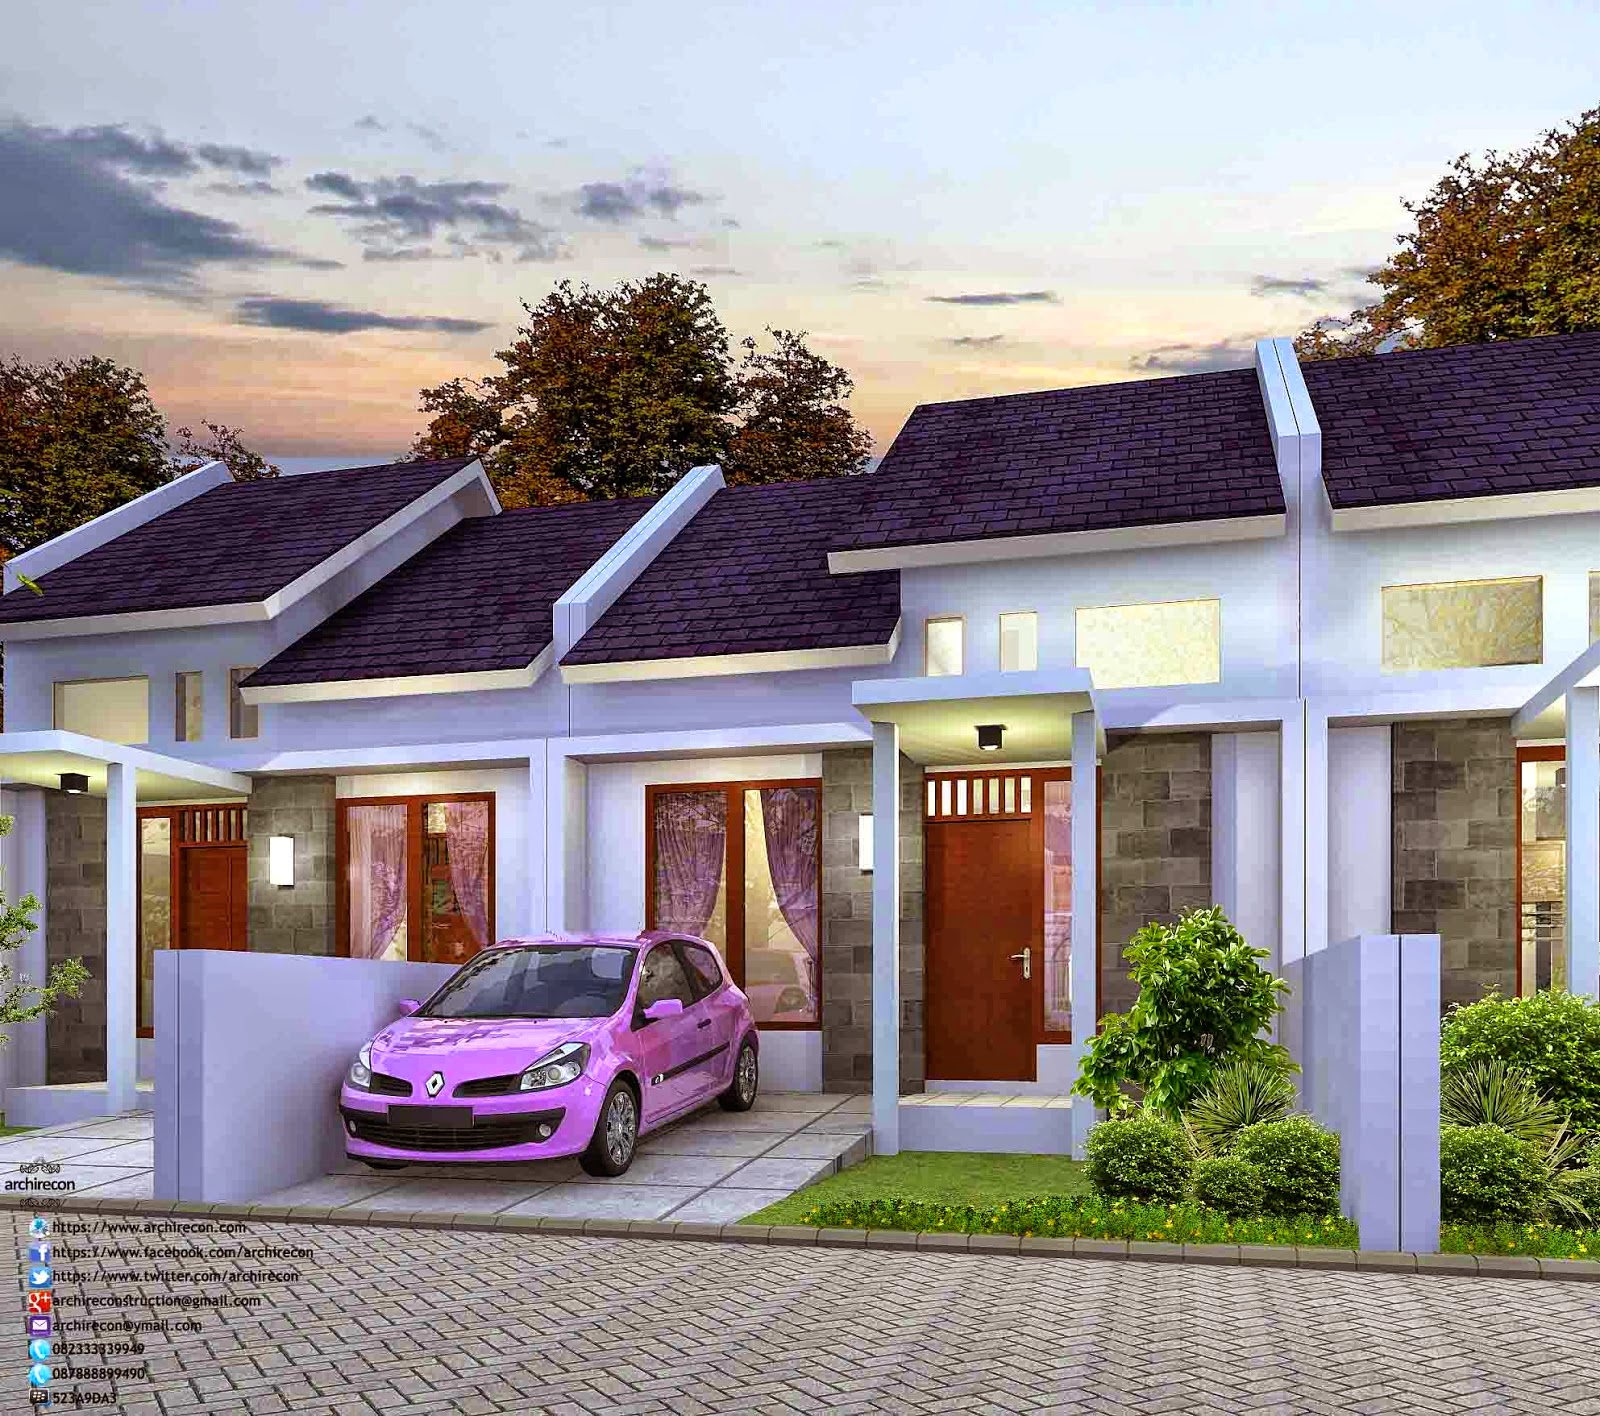 104 Rumah Minimalis Sederhana Type 36 Dijual Surabaya Gambar